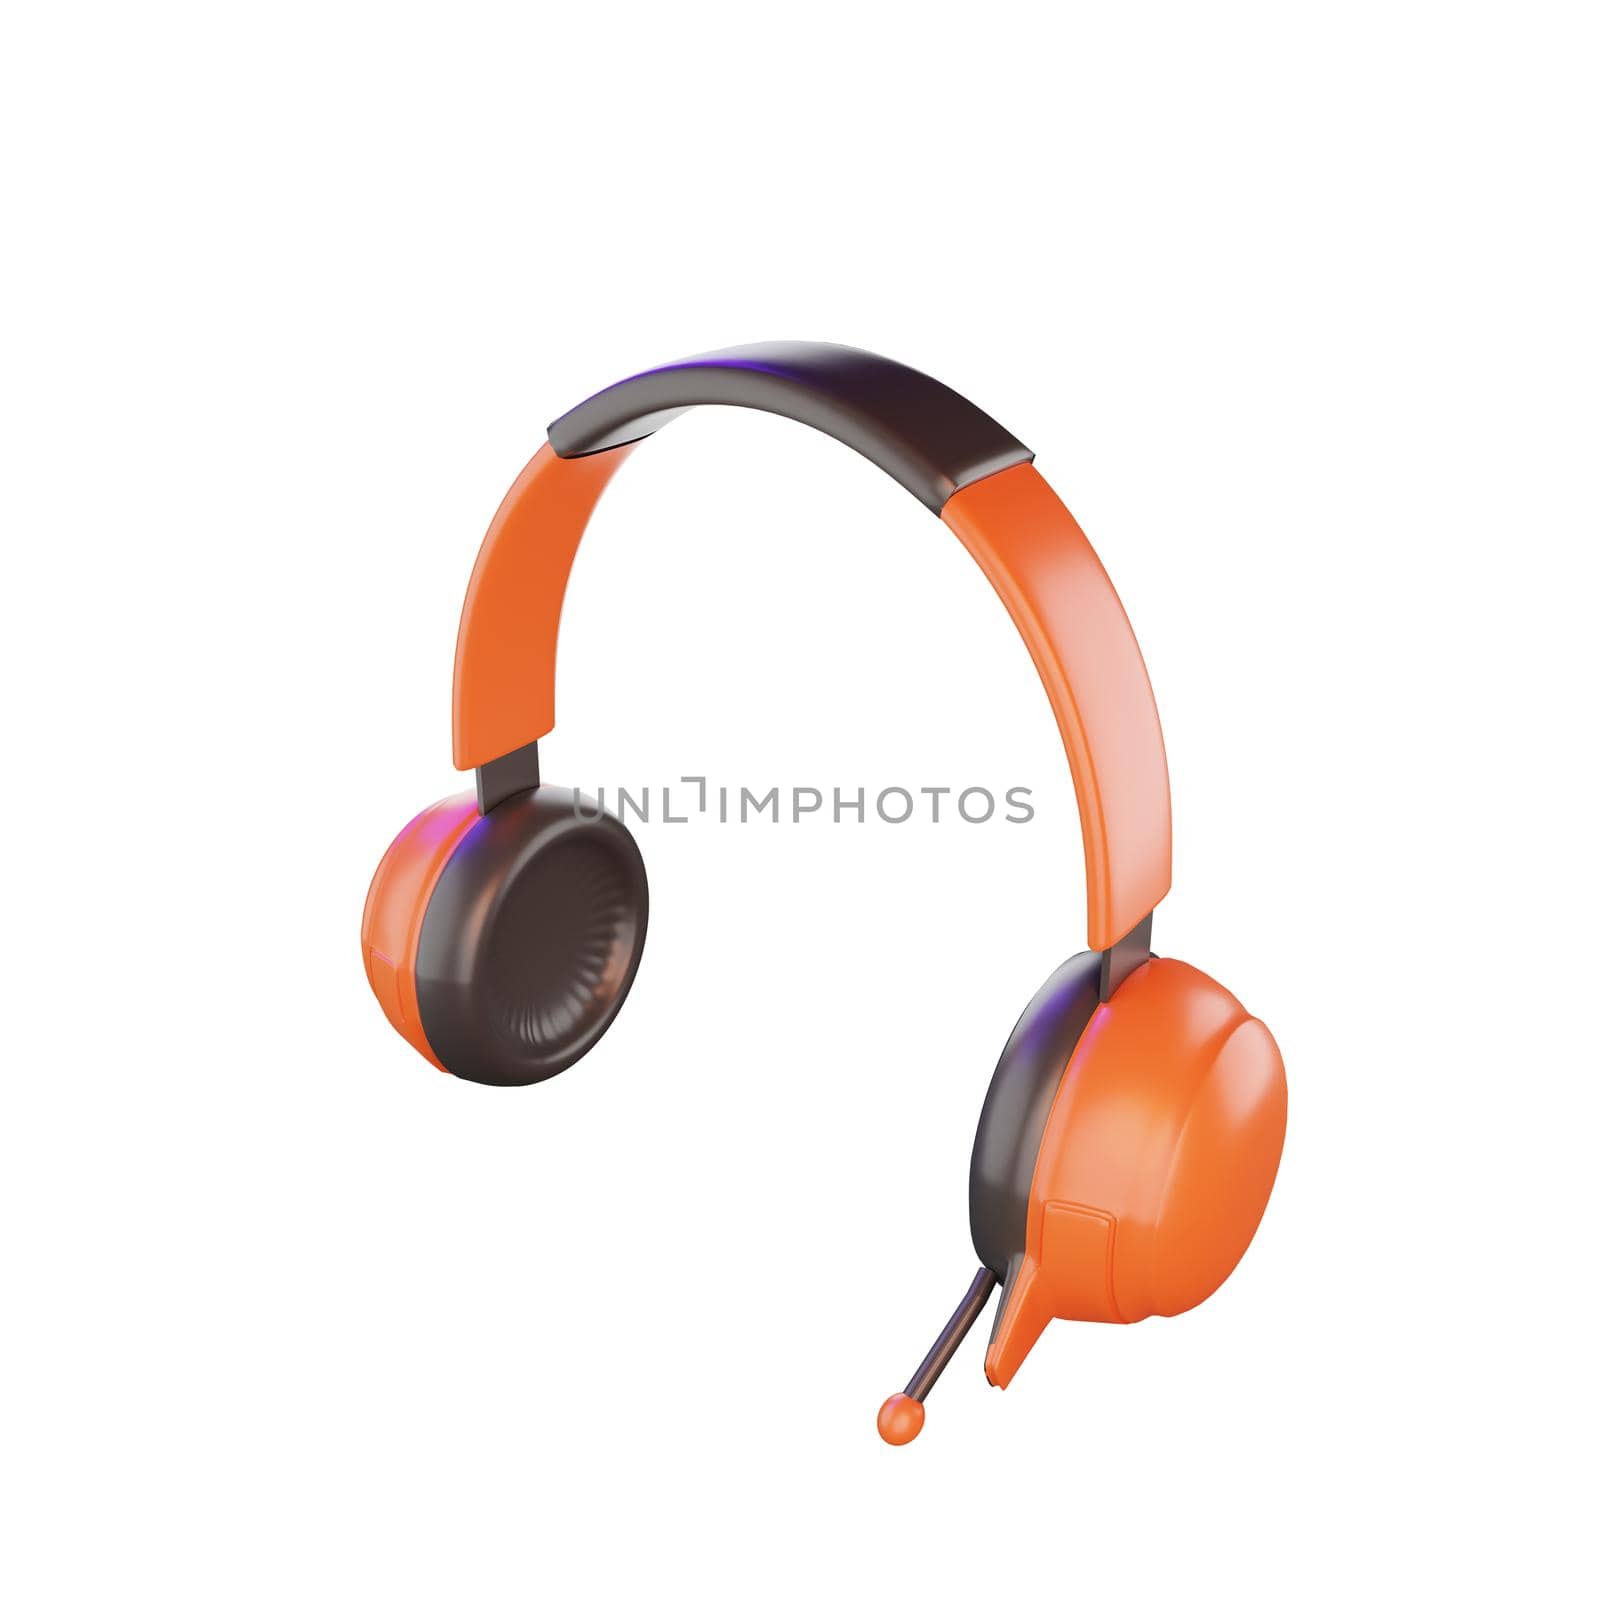 3d rendering of headphones isolated